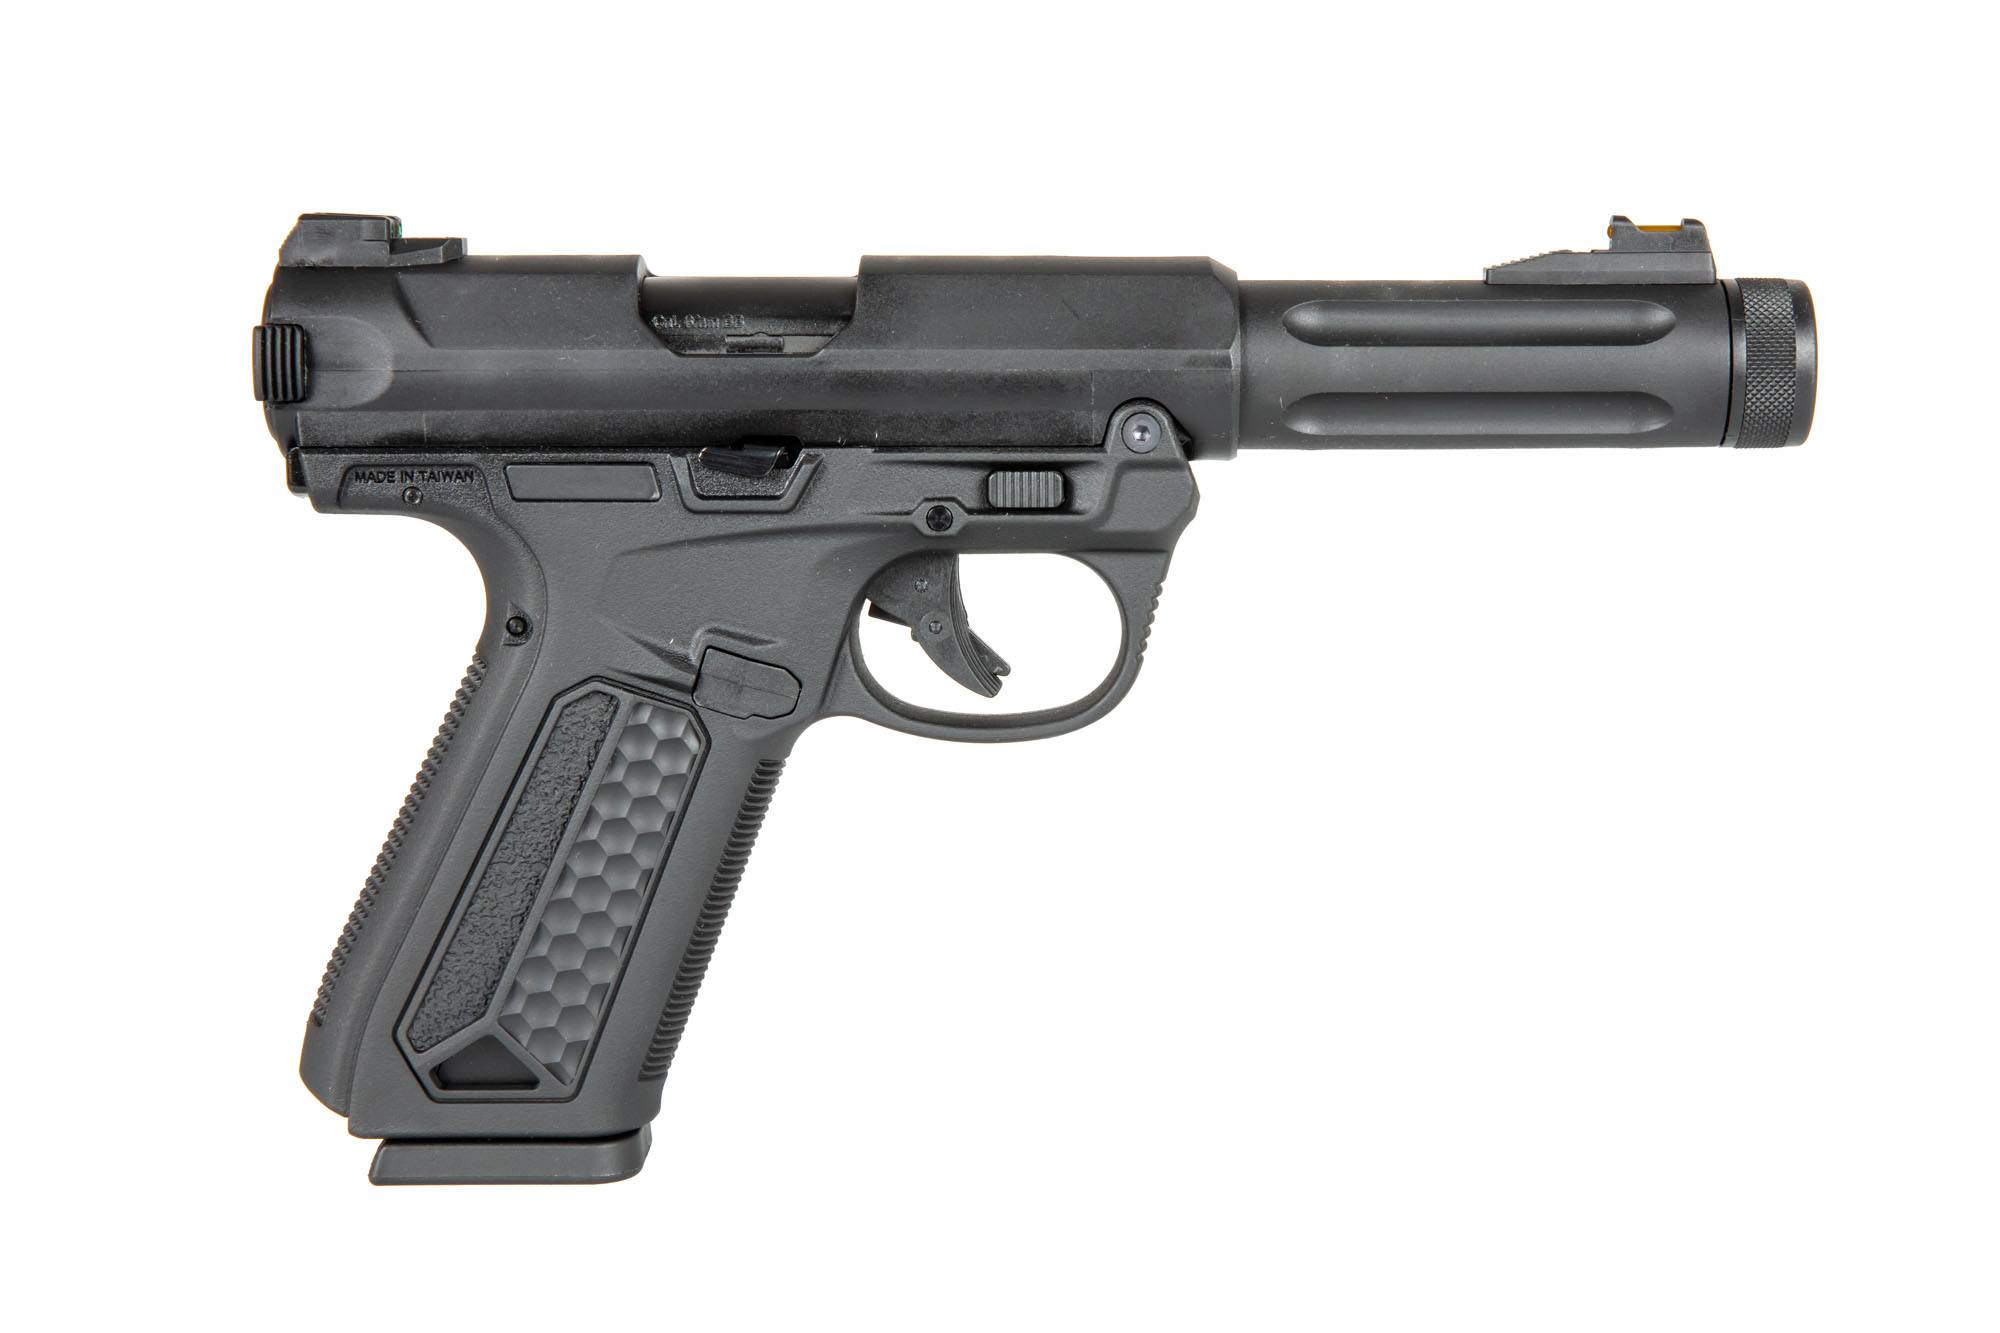 Pistola AAP01 Assassin completa/semi automatica – Nera